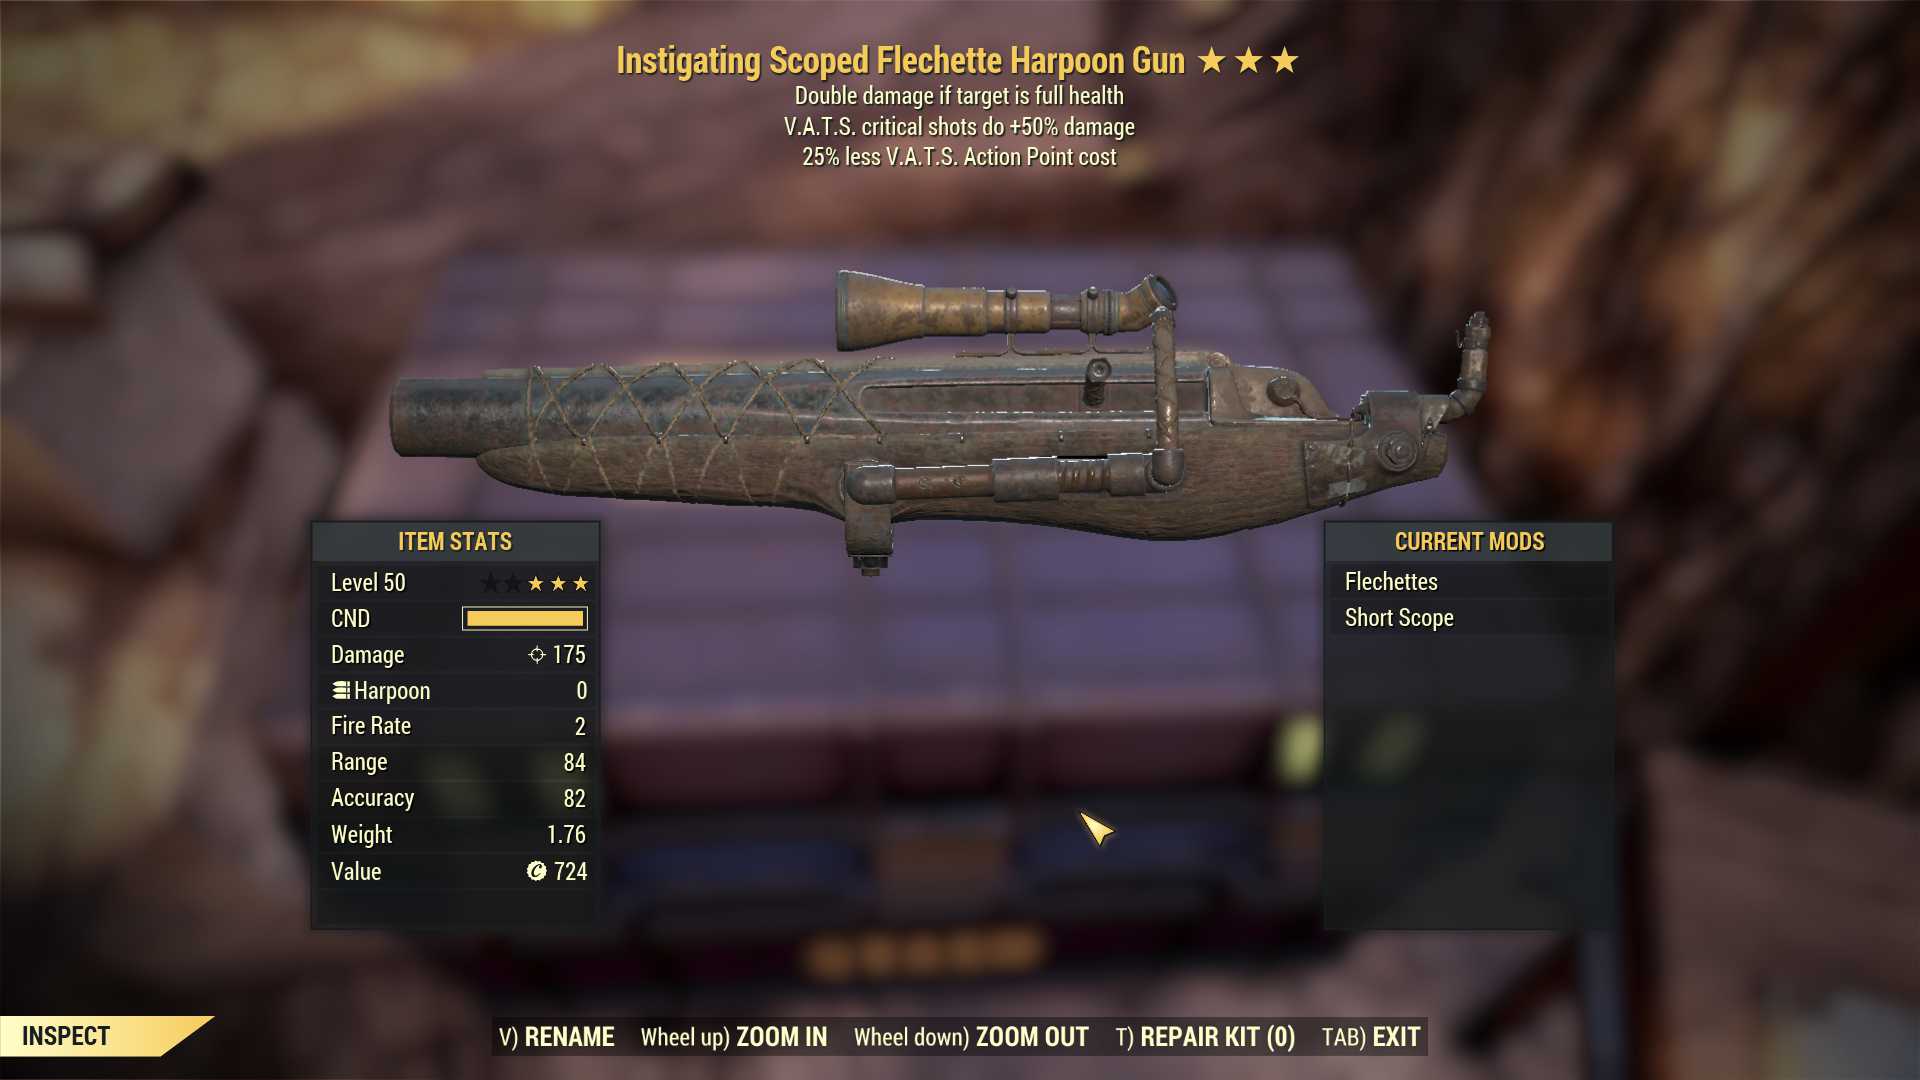 Instigating Harpoon Gun (+50% critical damage, 25% less VATS AP cost)